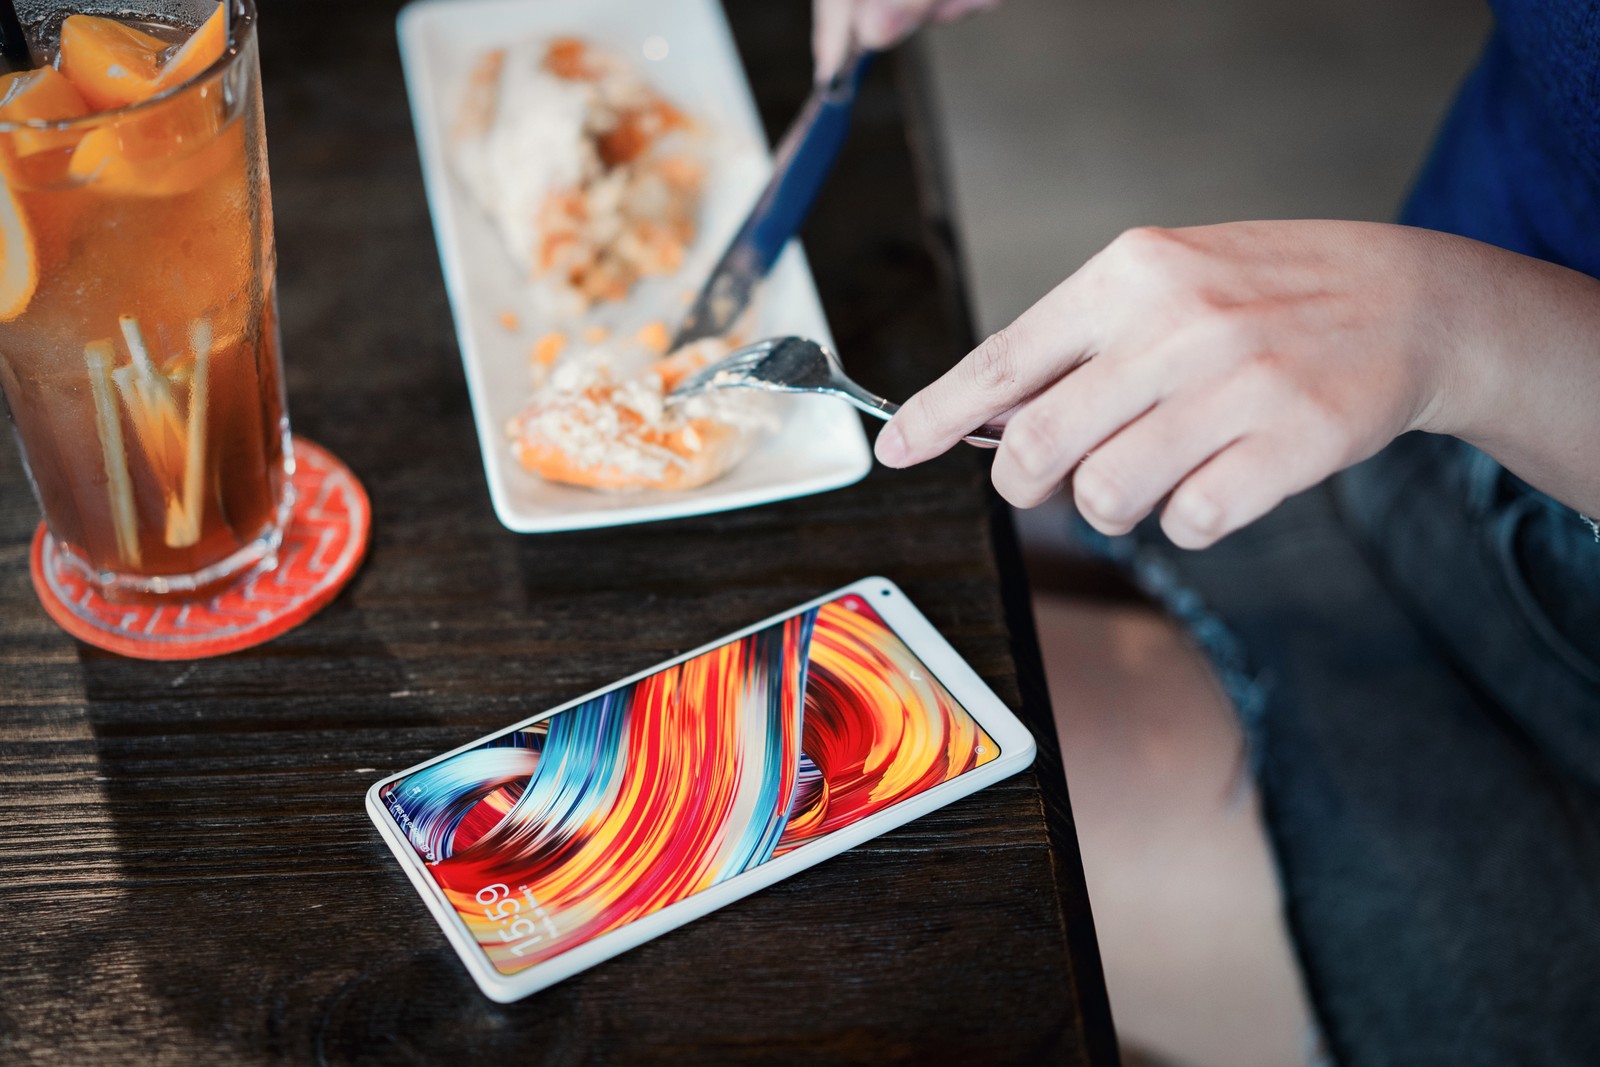 Xiaomi Mi Mix 2
Special
Edition - smartphone vỏ gốm tuyệt đẹp